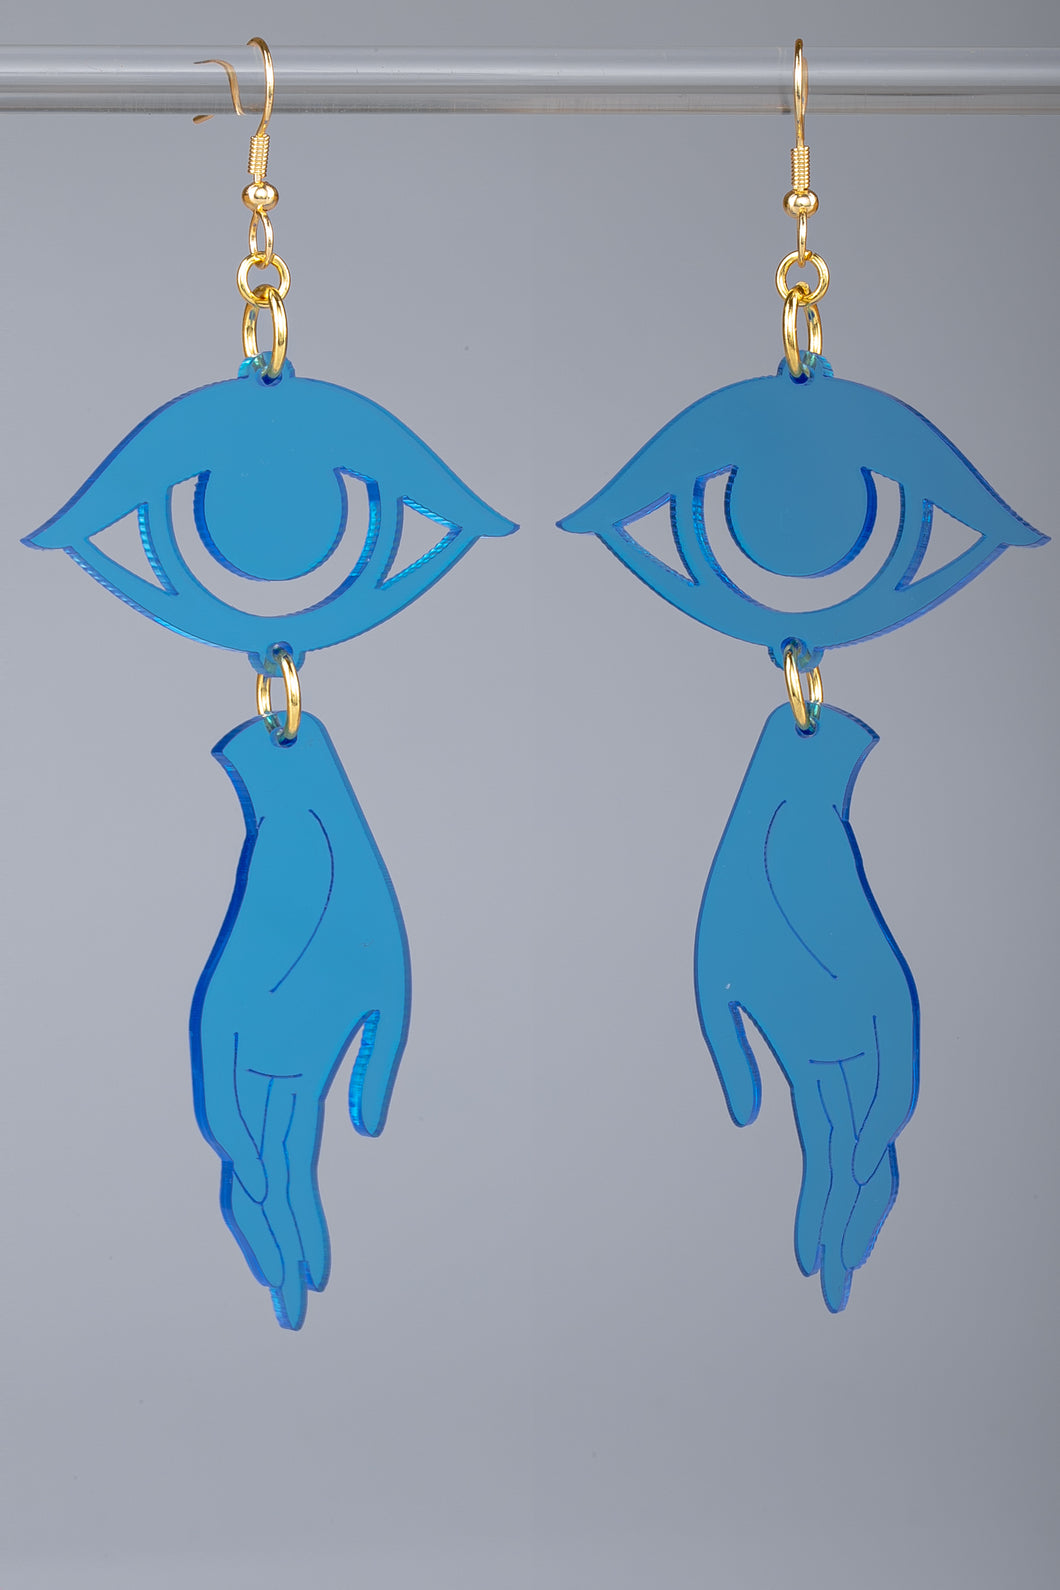 Large Hand Eye Earrings - Blue